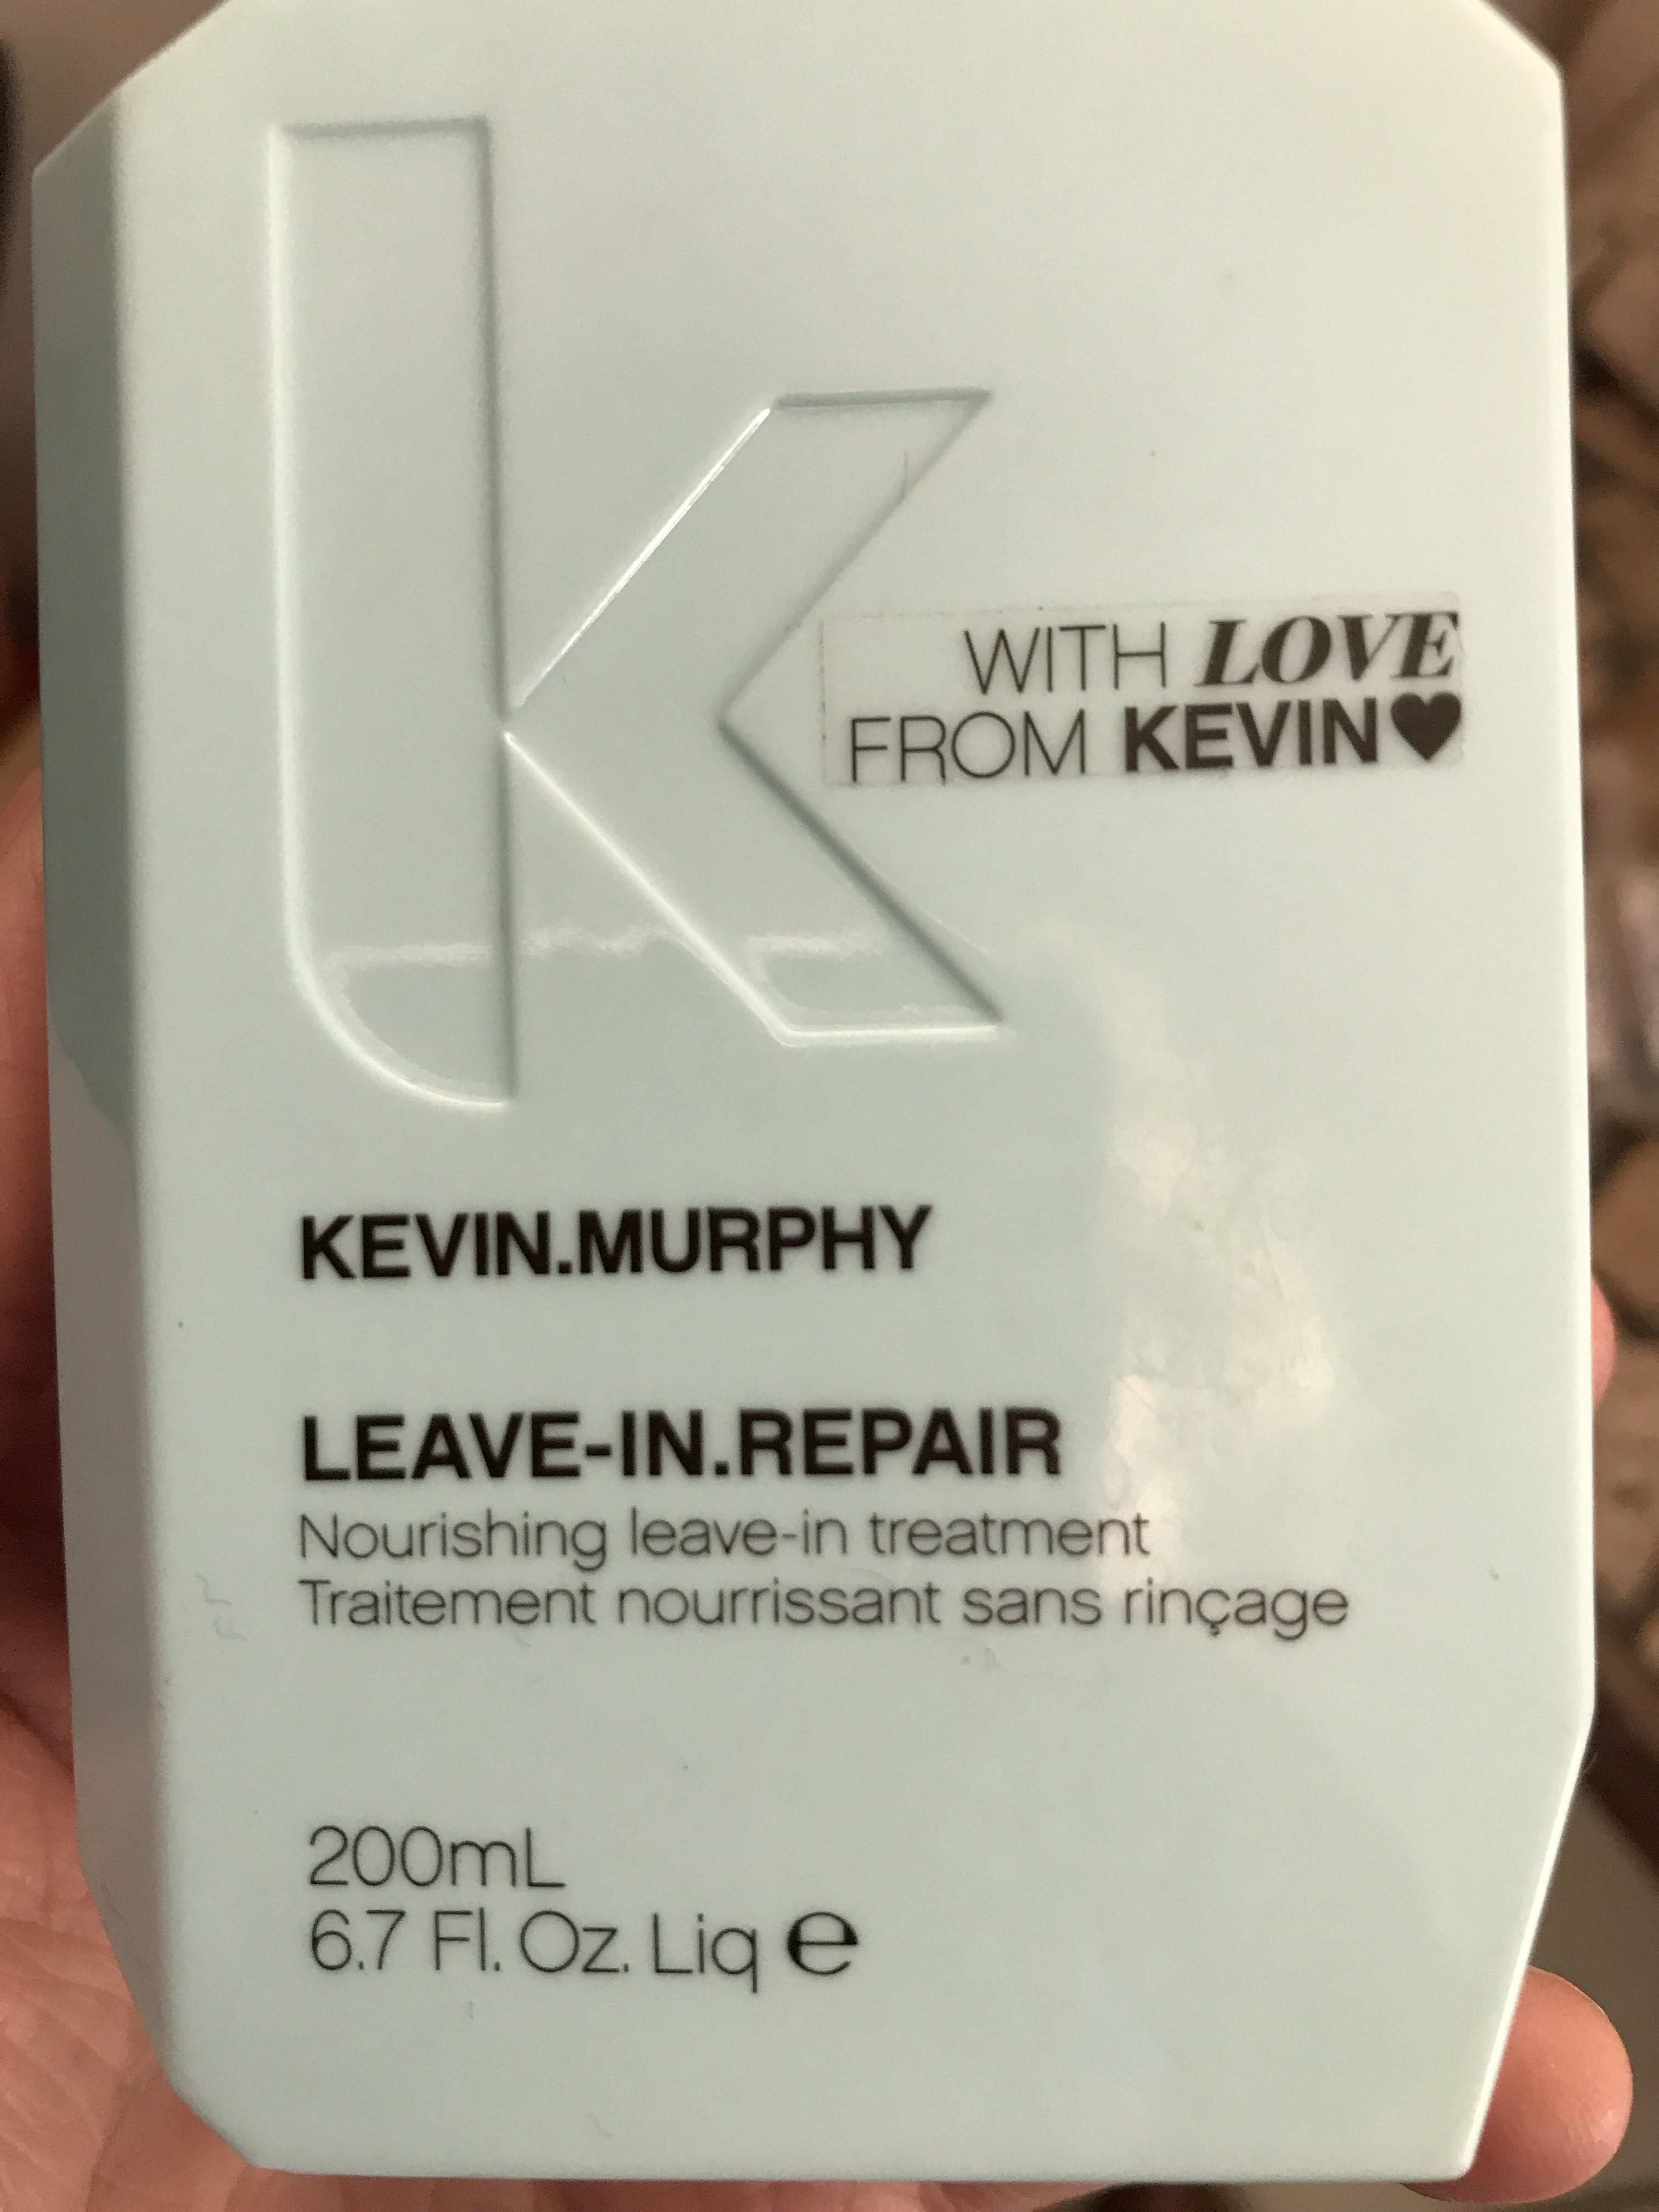 Leave-in.repair - Product - fr